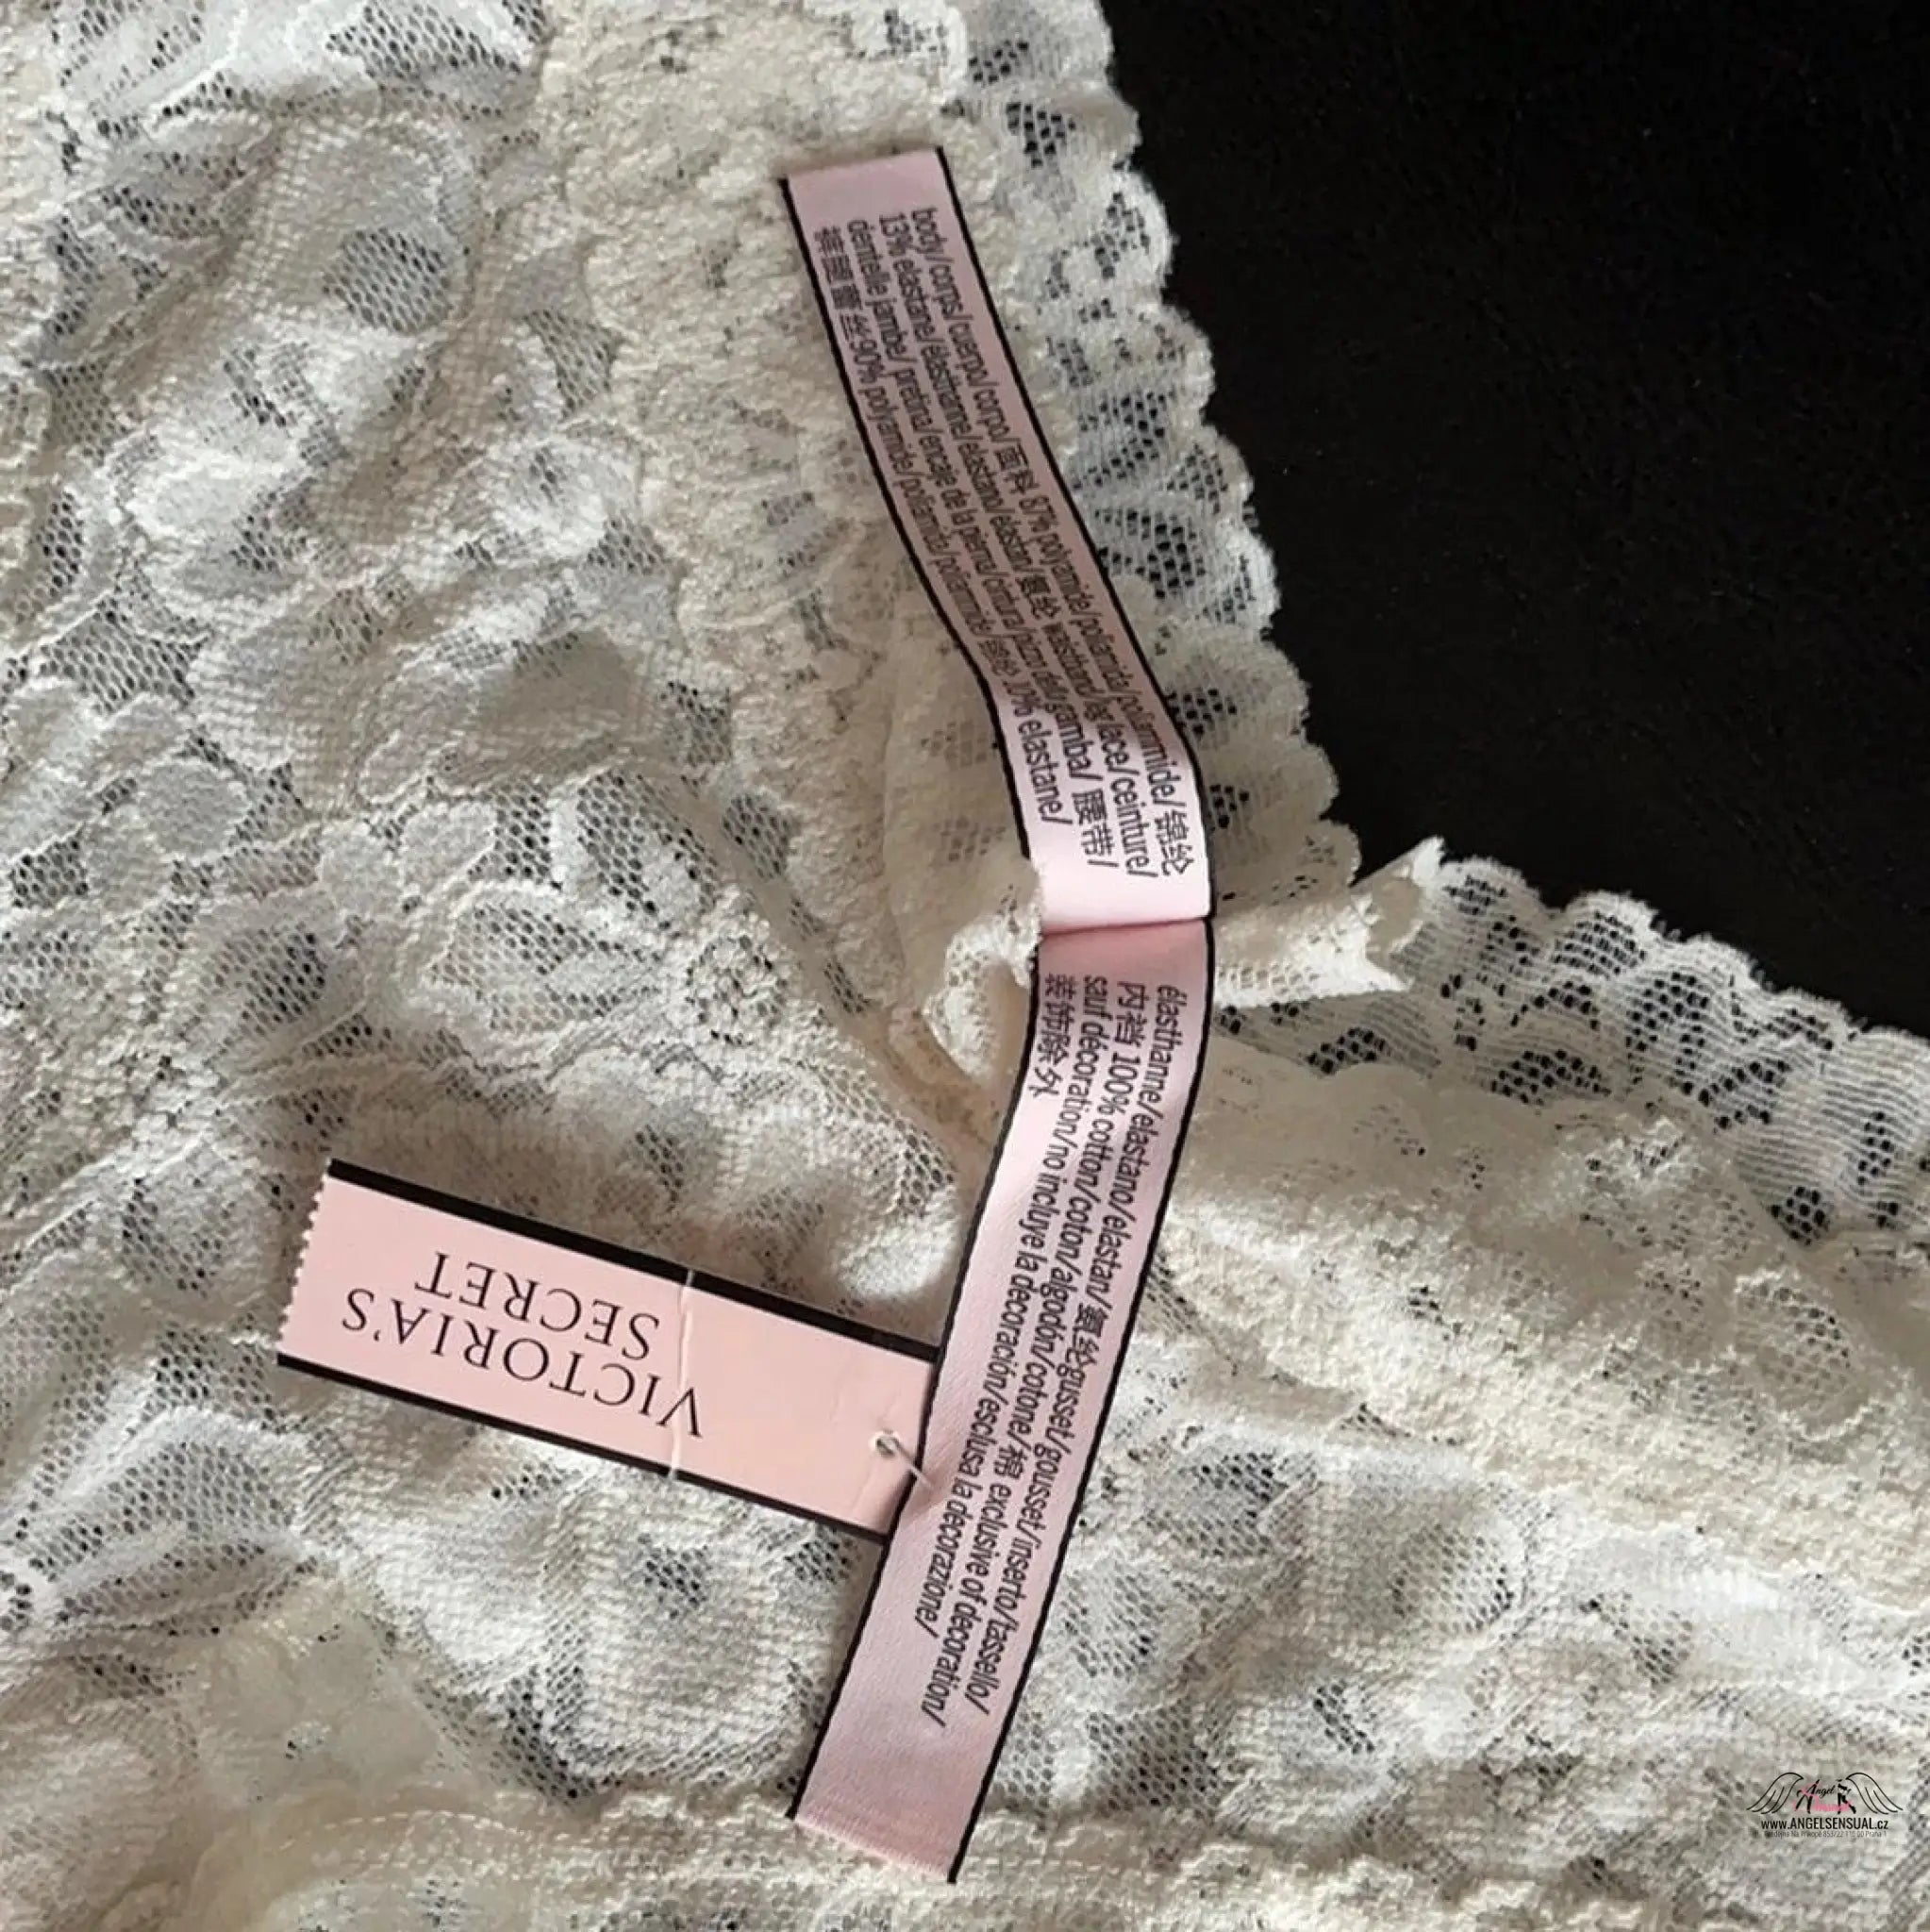 Lace Waist Cheeky Panty - Kalhotky Victoria’s Secret